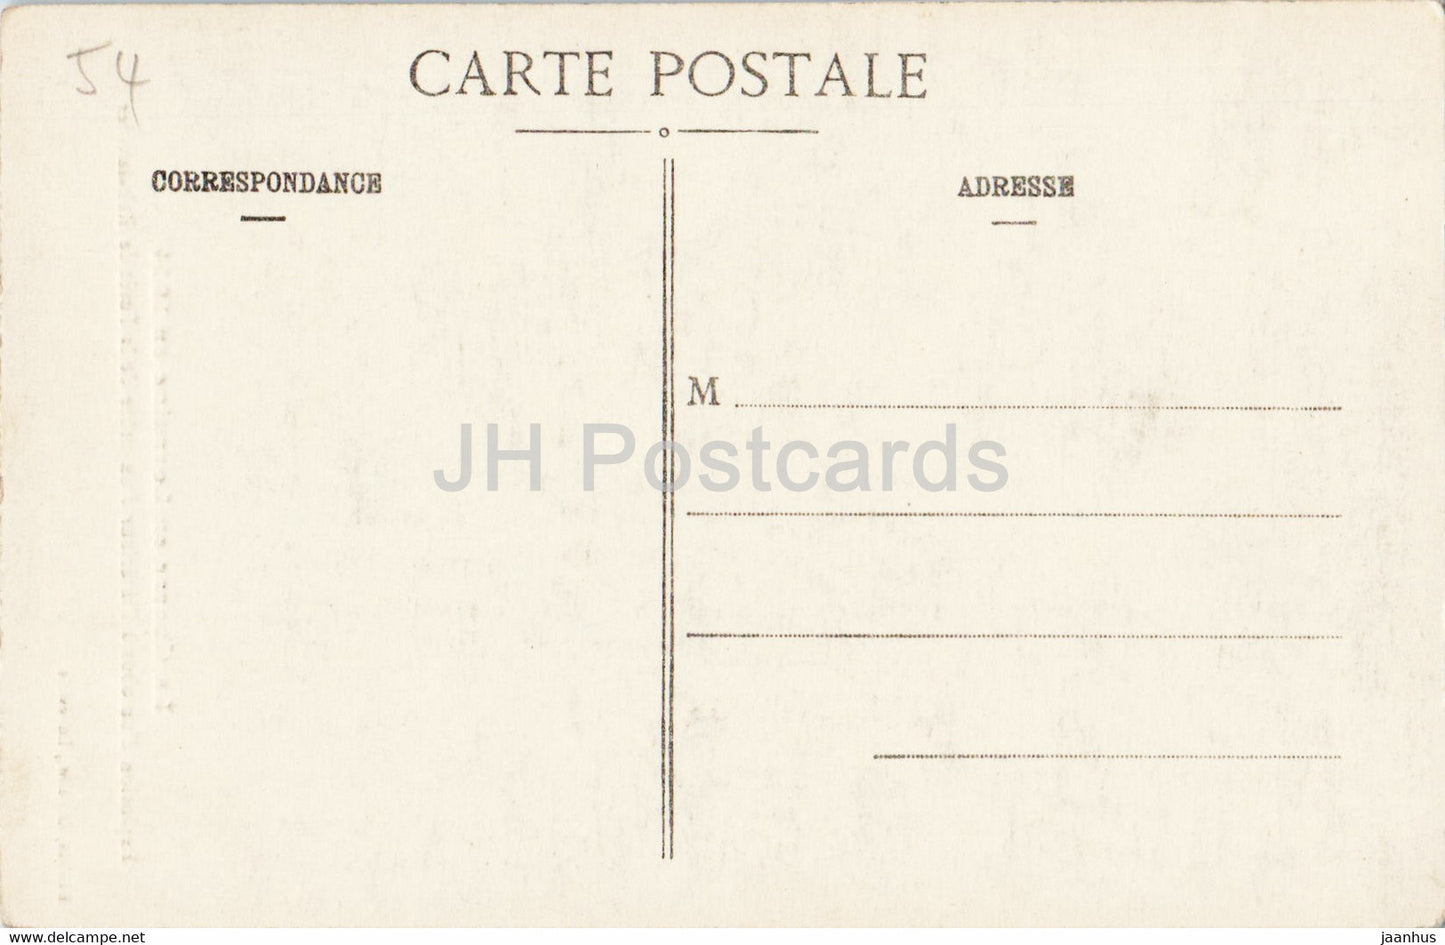 La Guerre en Lorraine 1914 – Explosion – Foret de Rehainviller – Militär – alte Postkarte – Frankreich – unbenutzt